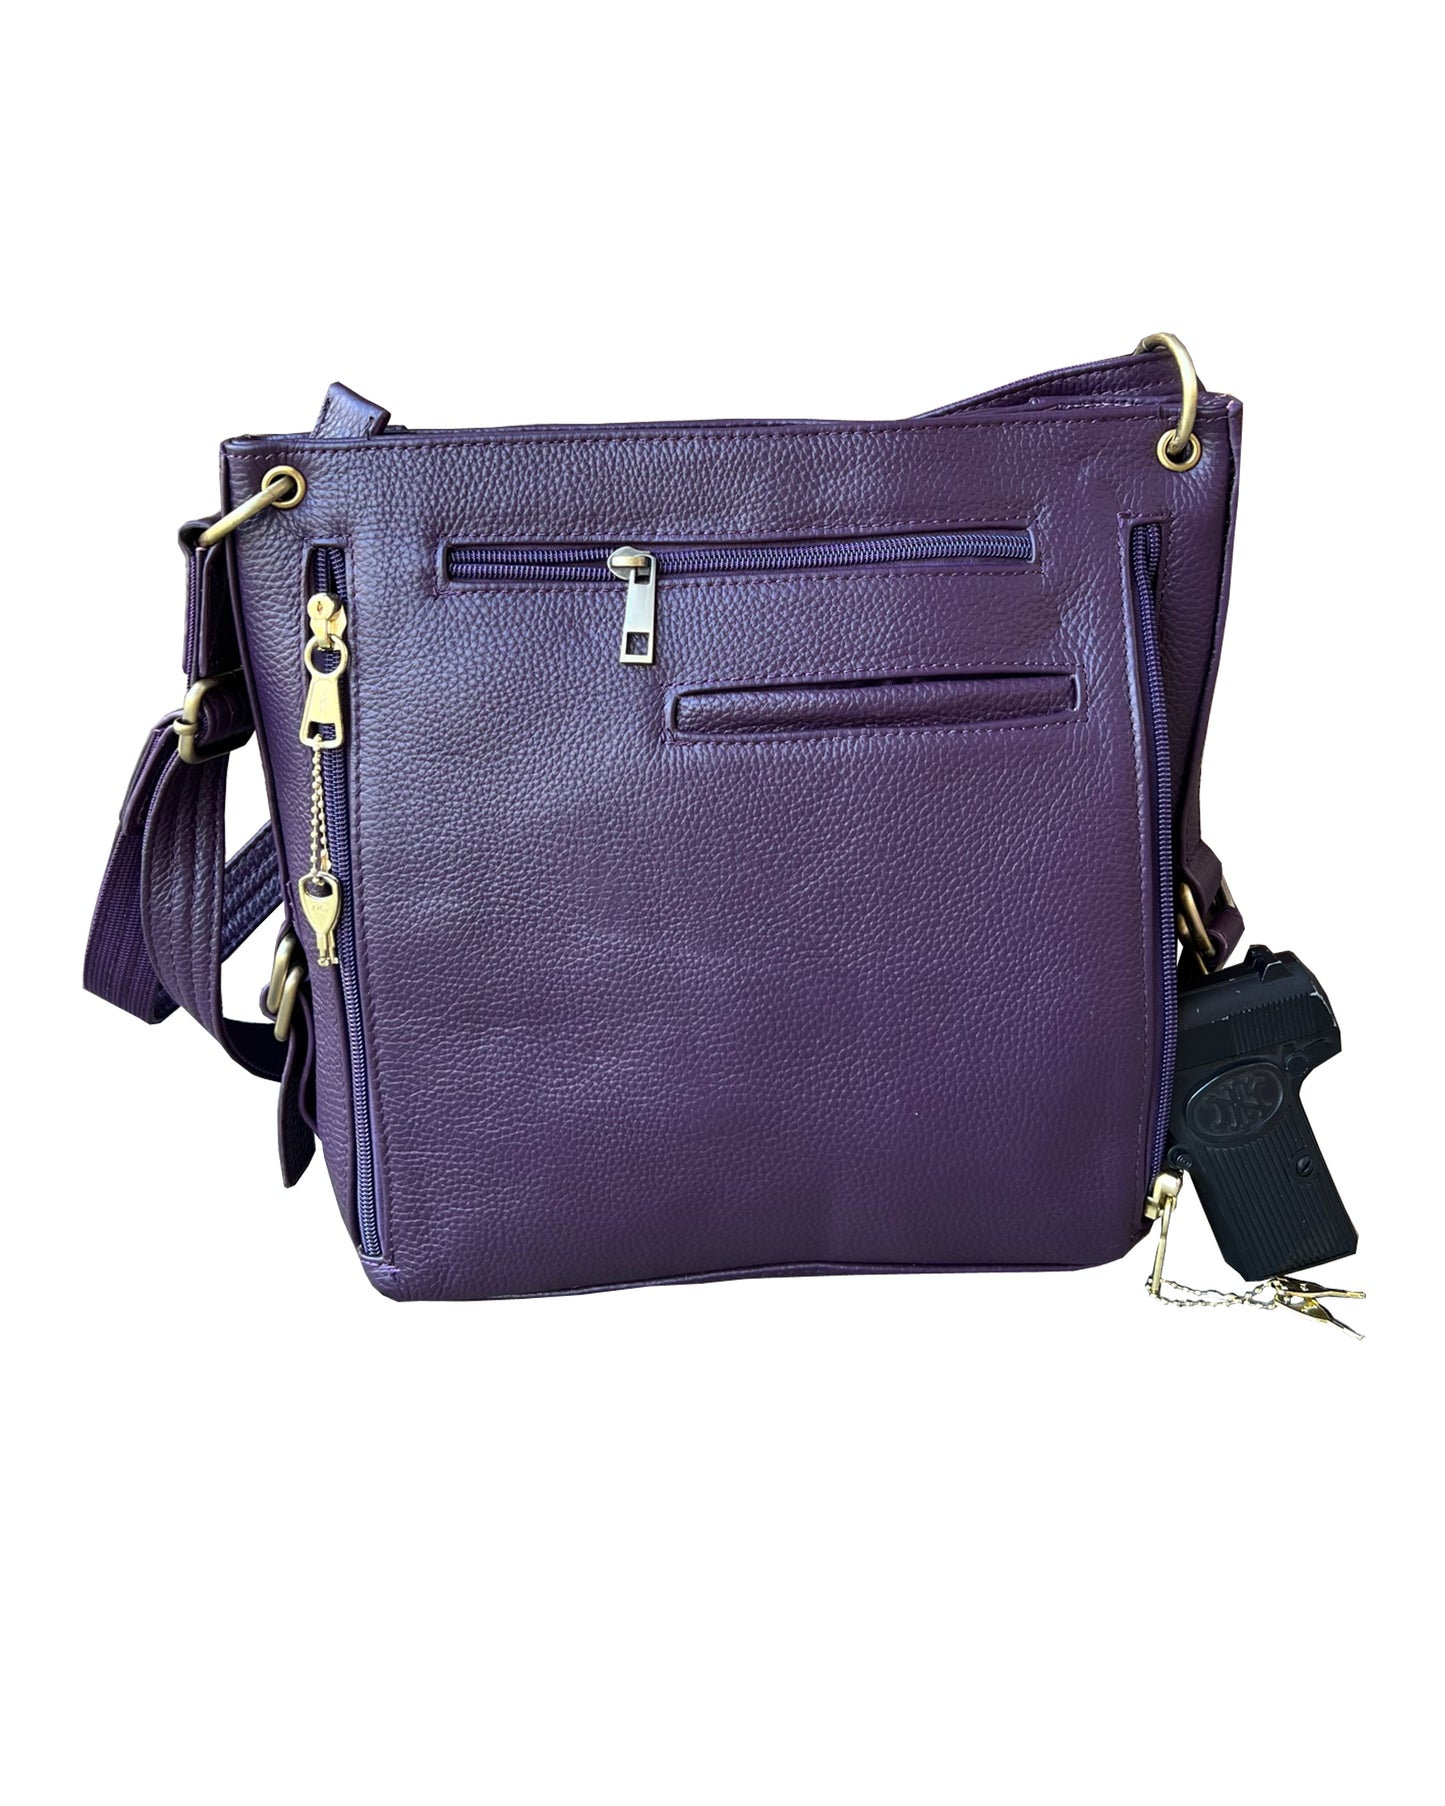 Stylish Leather Concealed Carry Satchel with Adjustable Shoulder Strap & Locking Zippers - Hiding Hilda, LLC